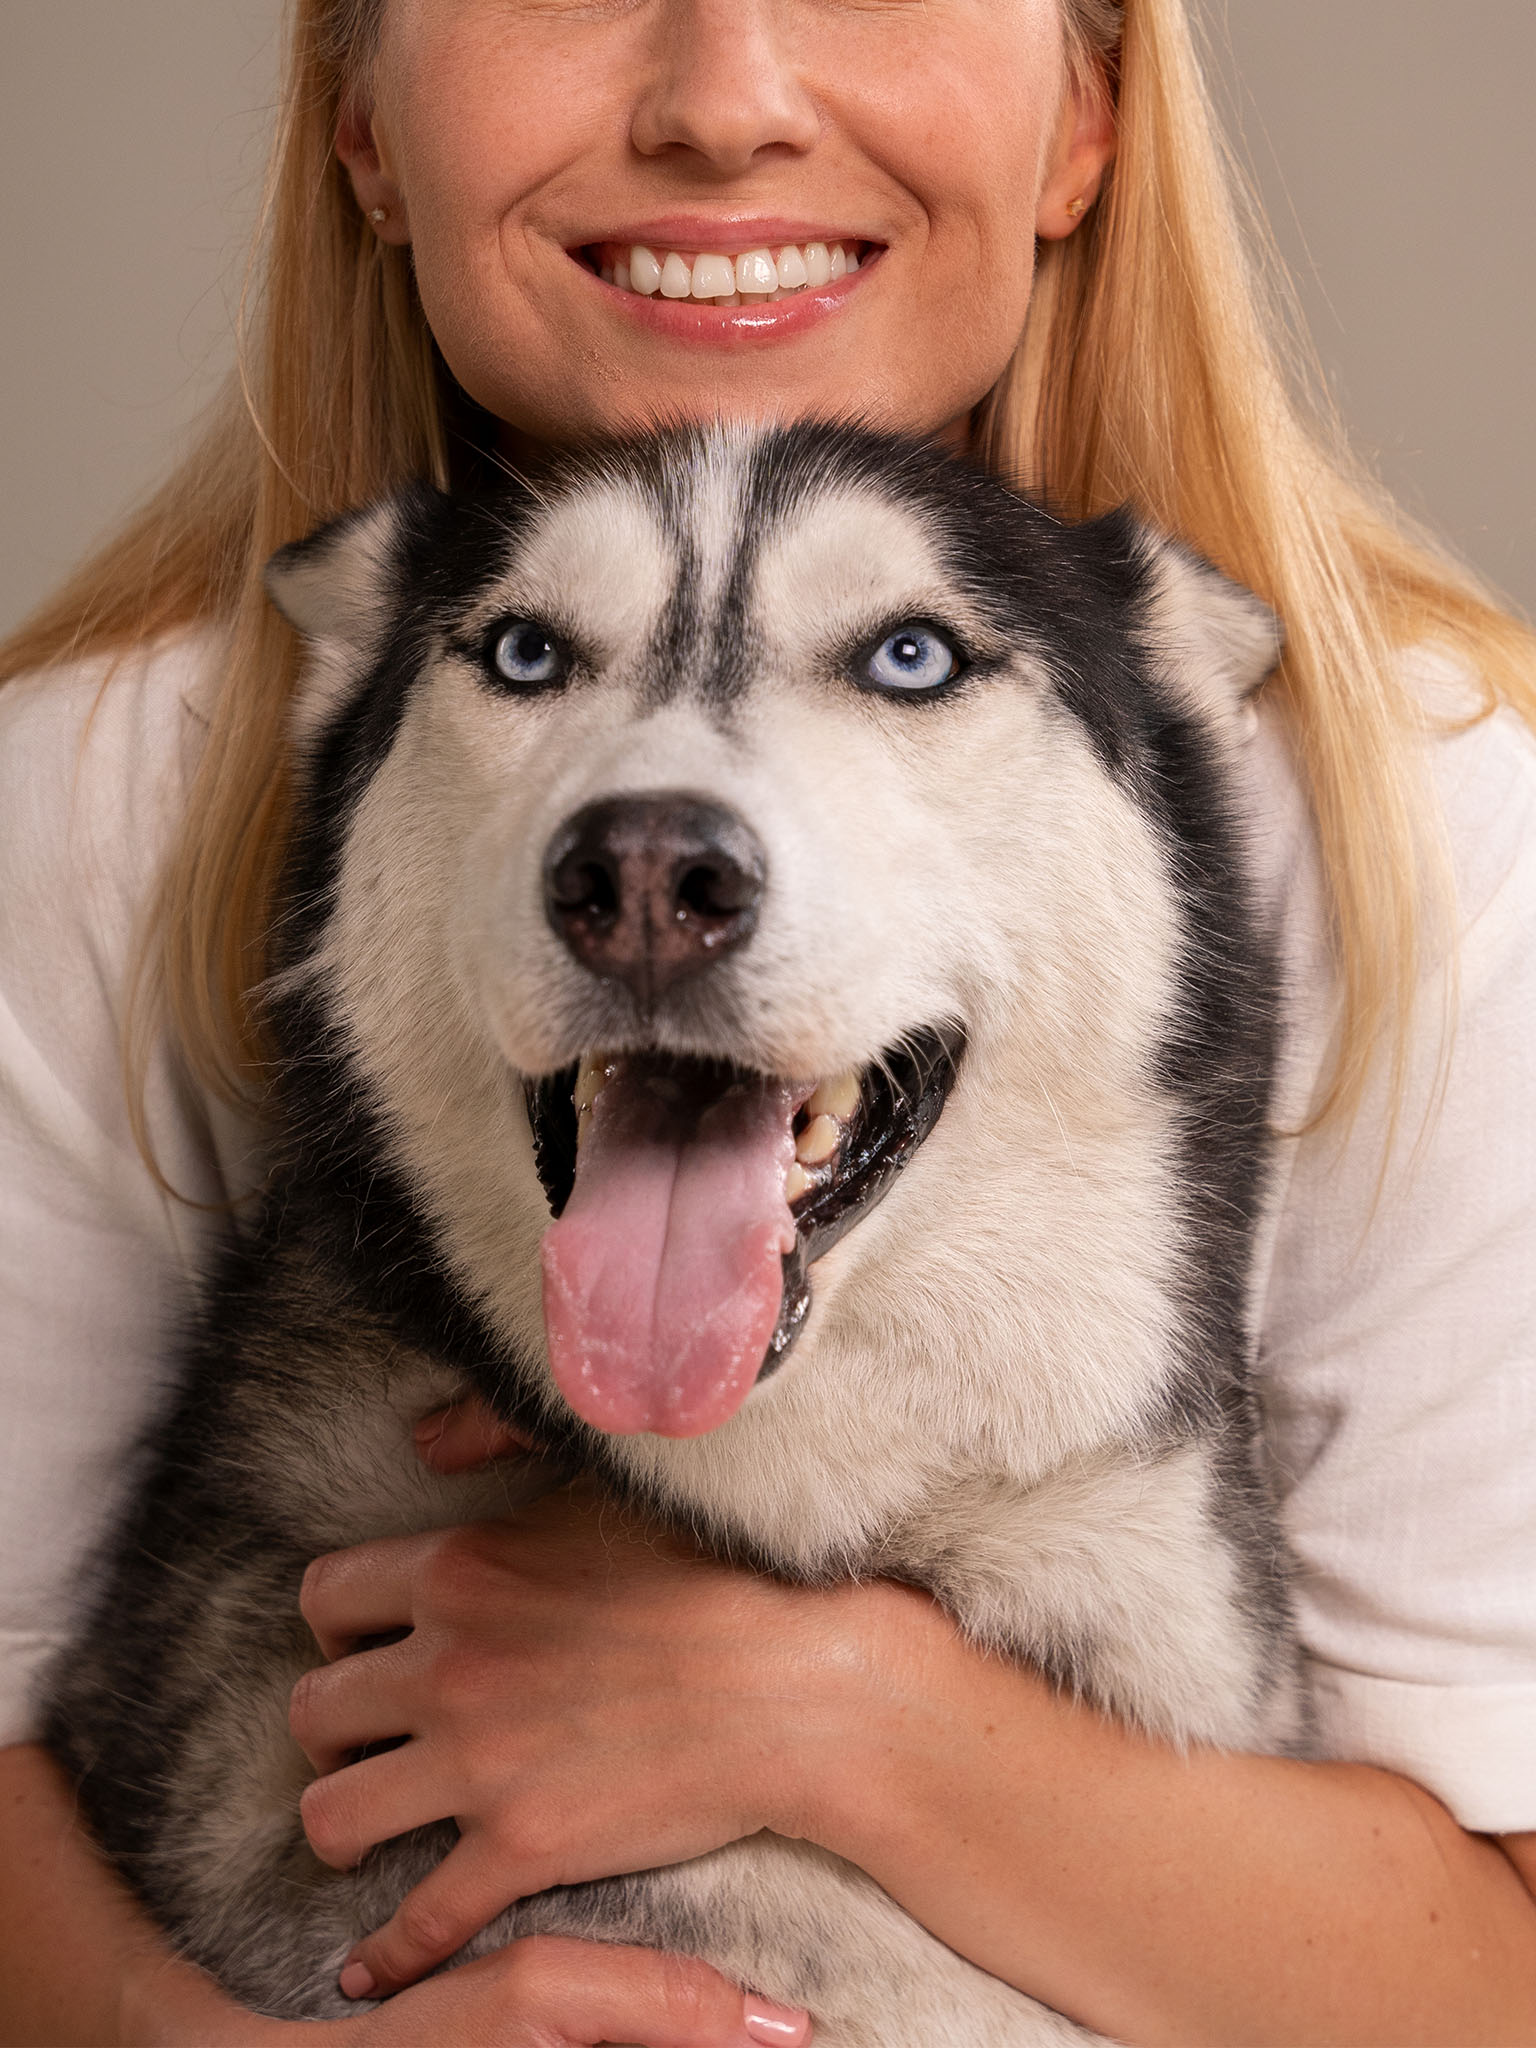 a person holding a husky dog